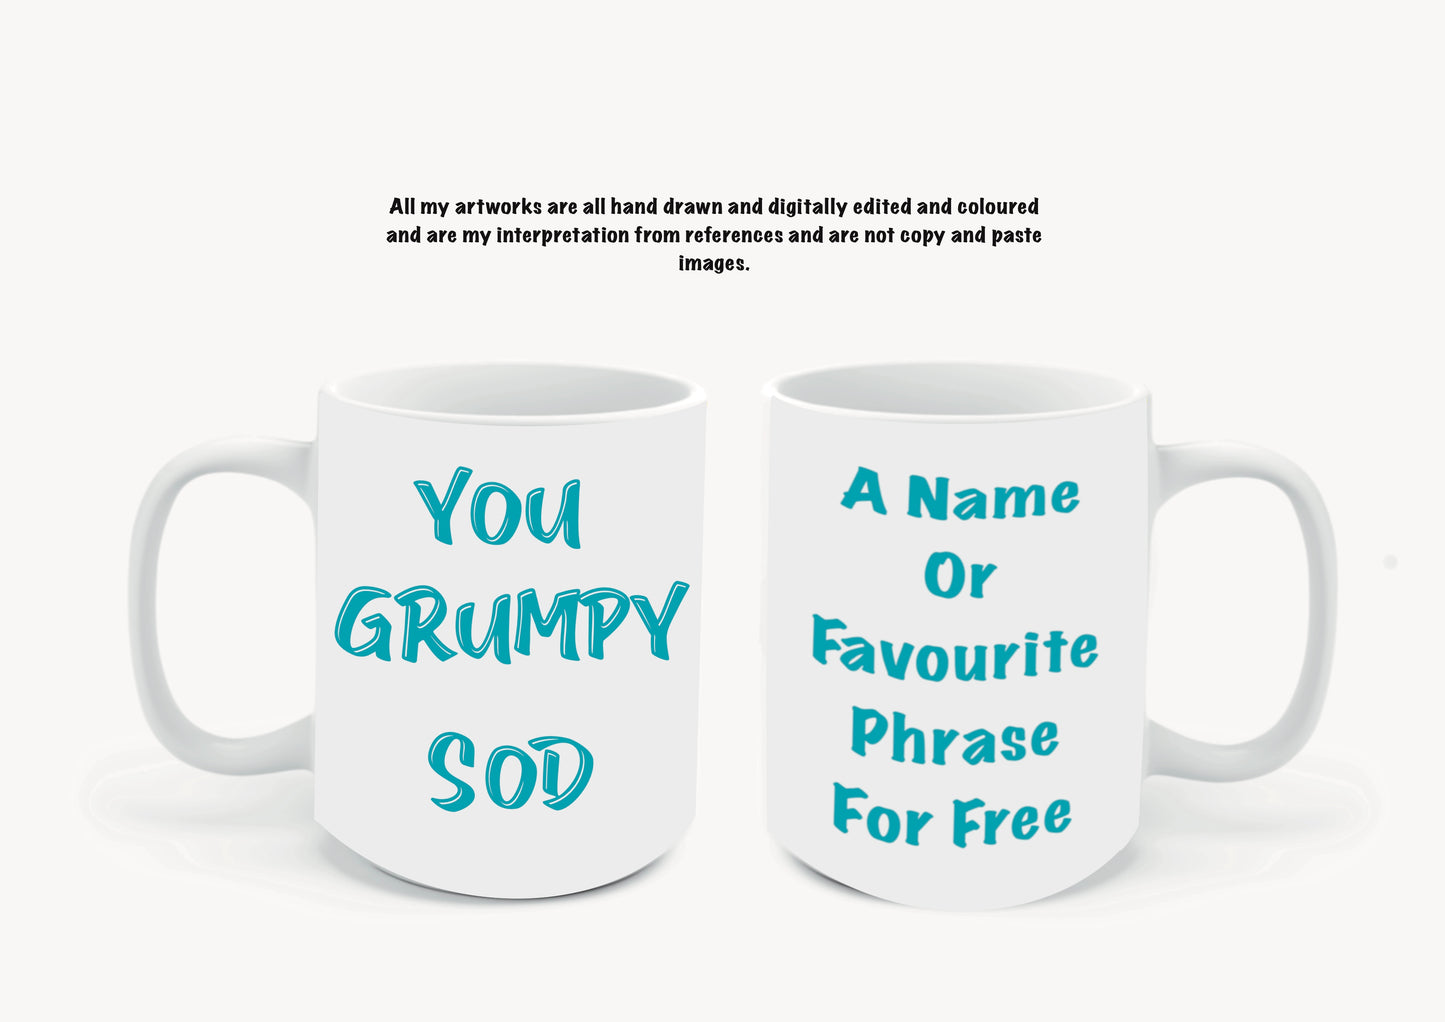 grumpy sod 10oz Mugs add a name personalise for FREE